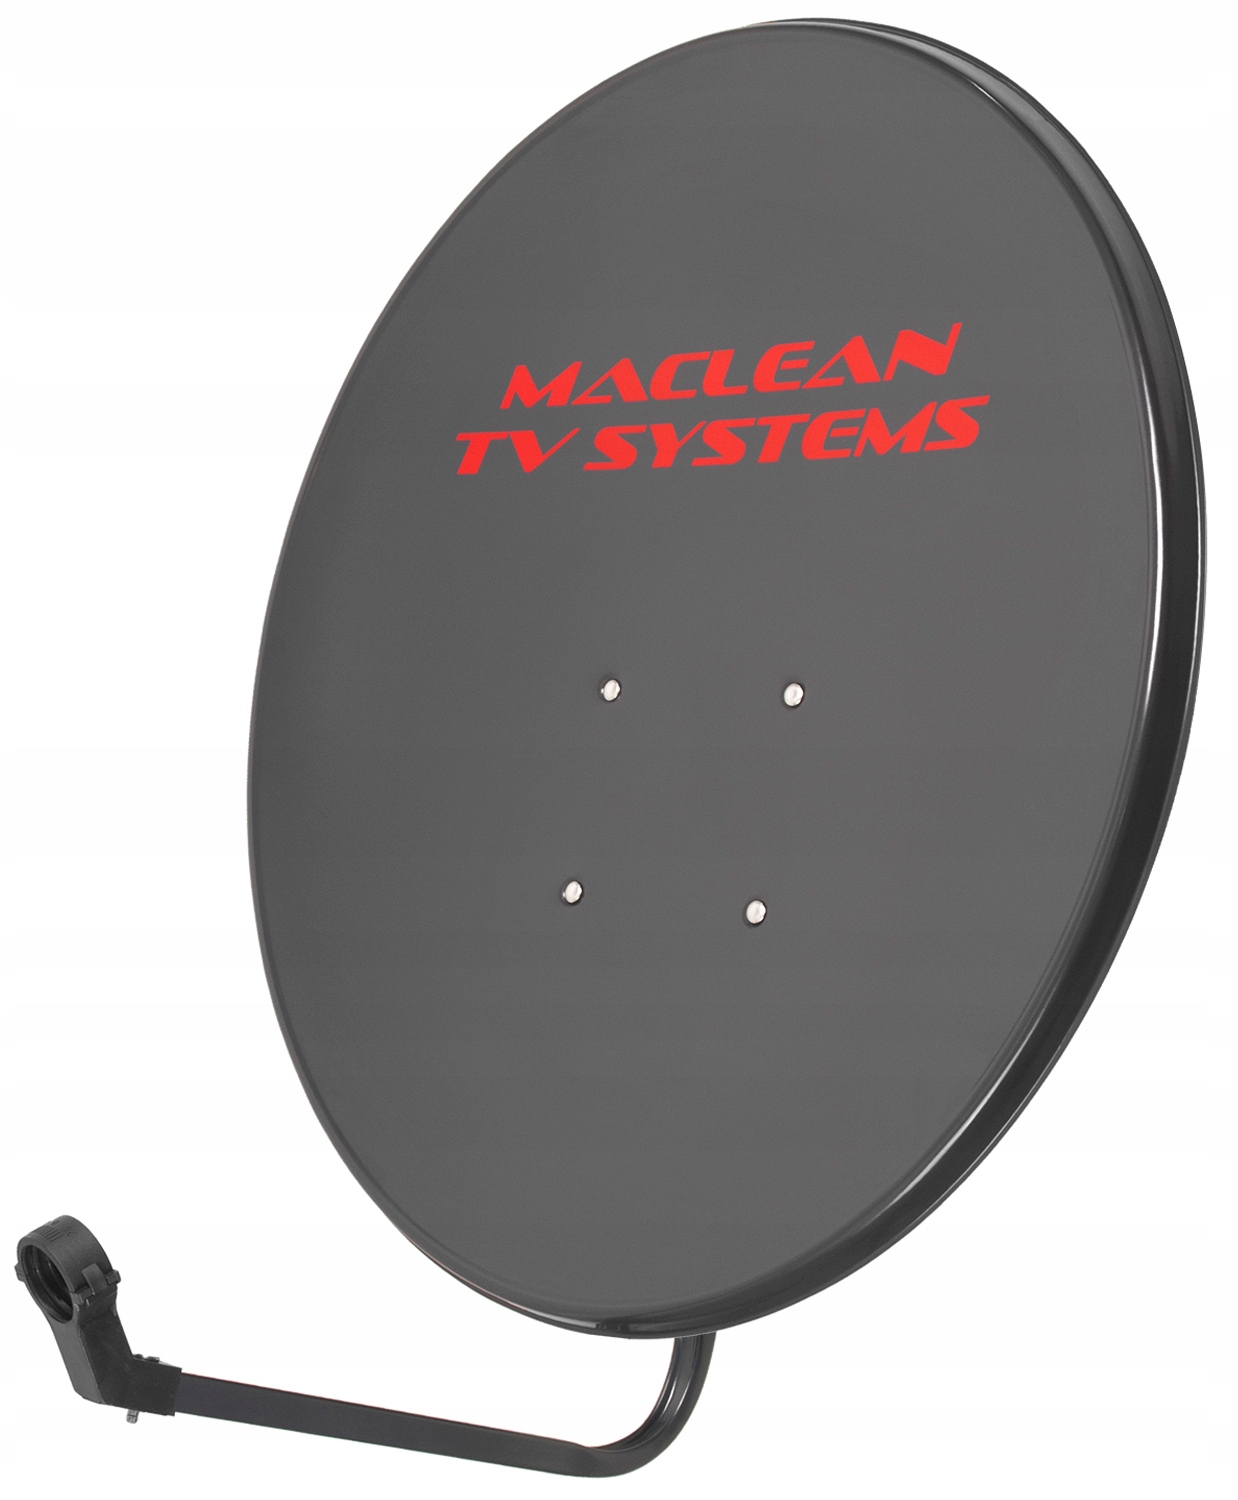 anteny-satelitarne-sprz-t-satelitarny-rtv-i-agd-allegro-pl